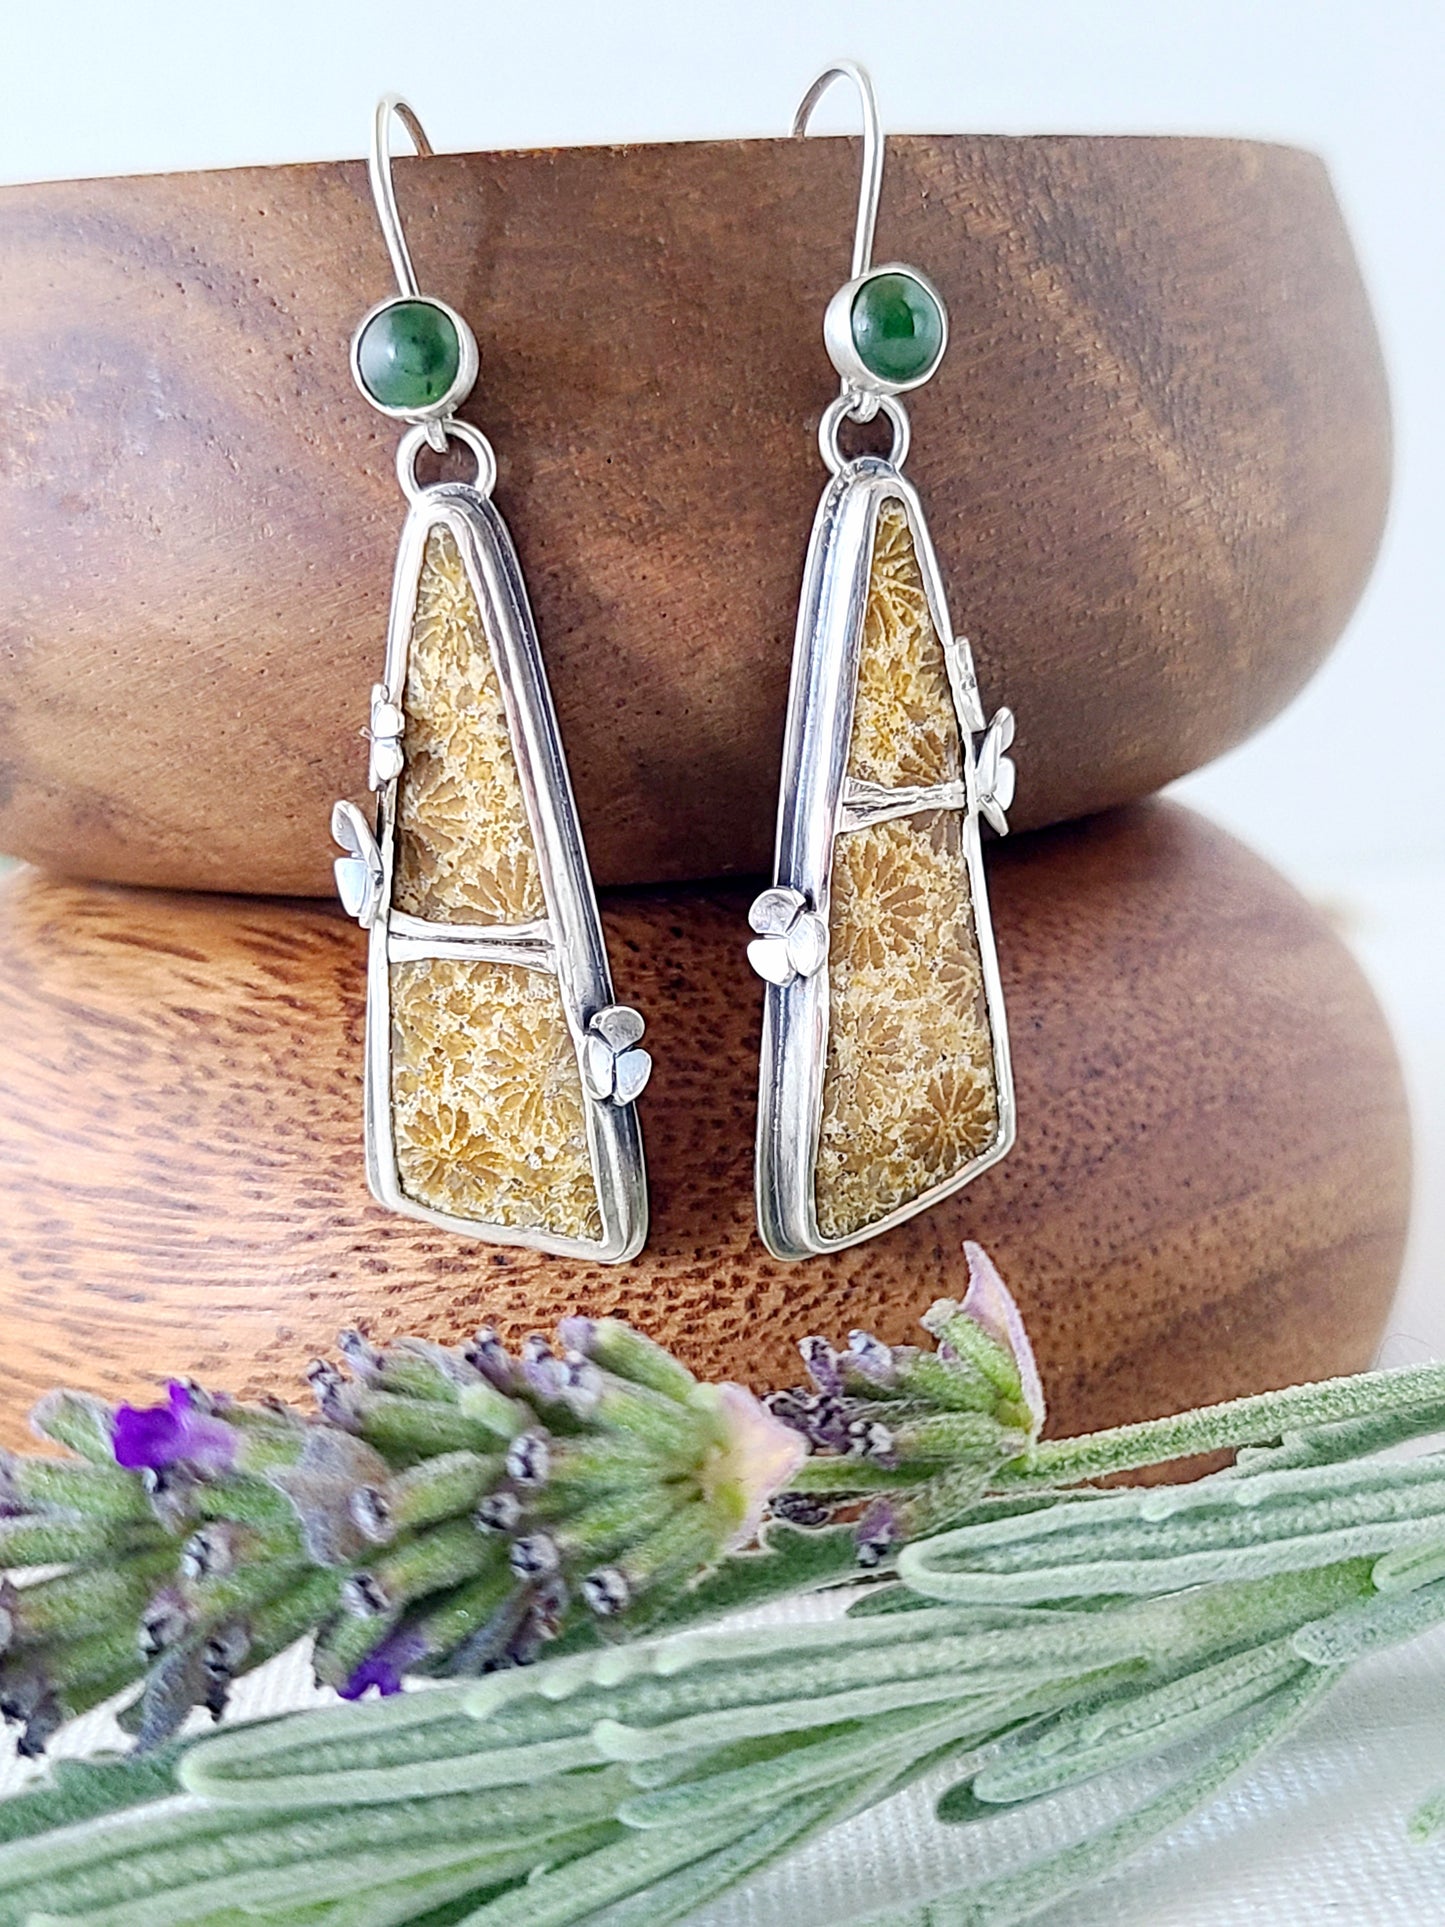 Fossil Flower earrings with Jade